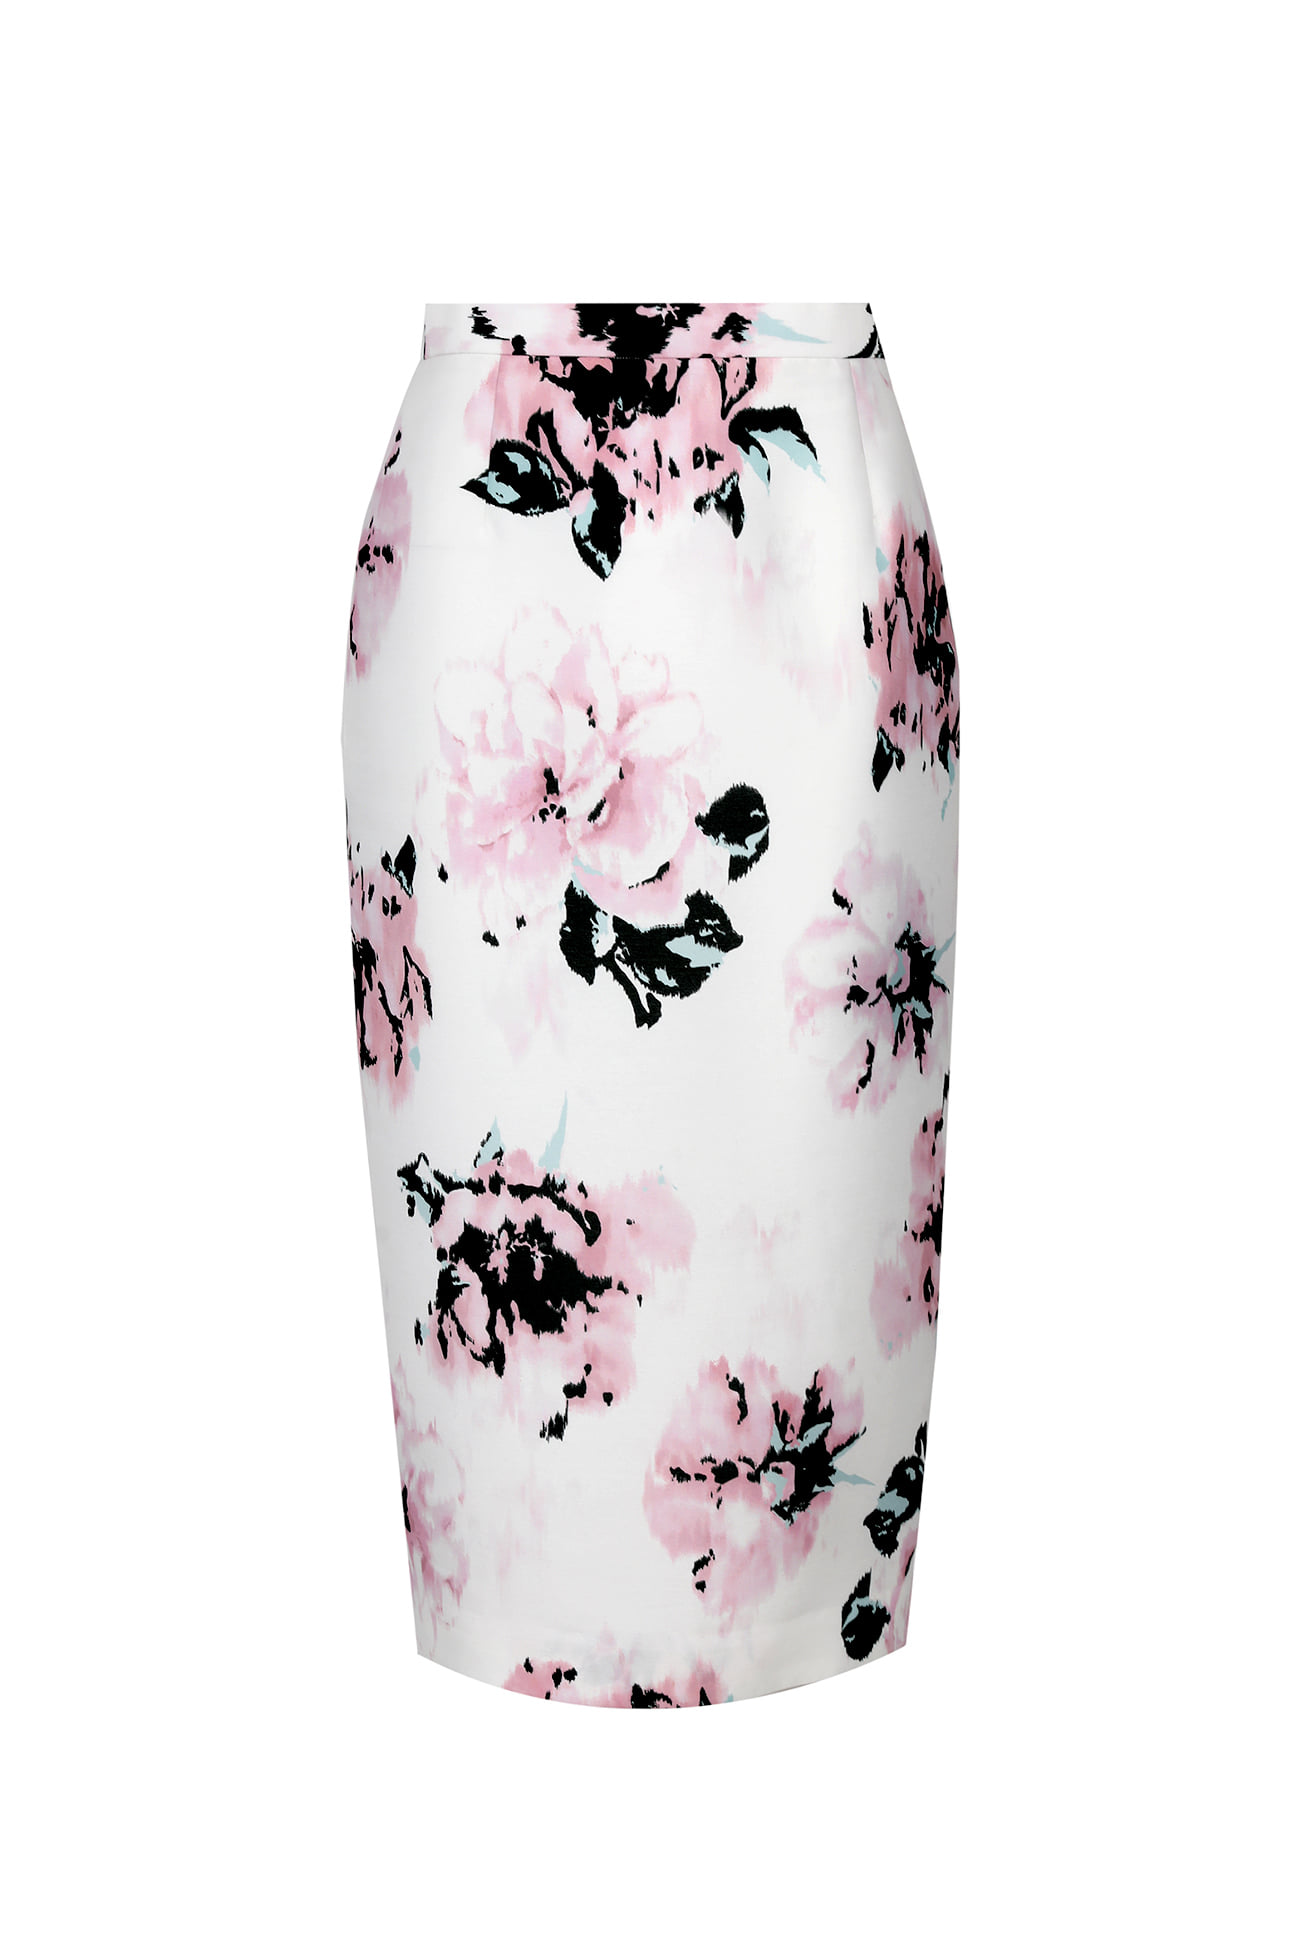 HIGH QUALITY LINE - Paris Floral Skirt